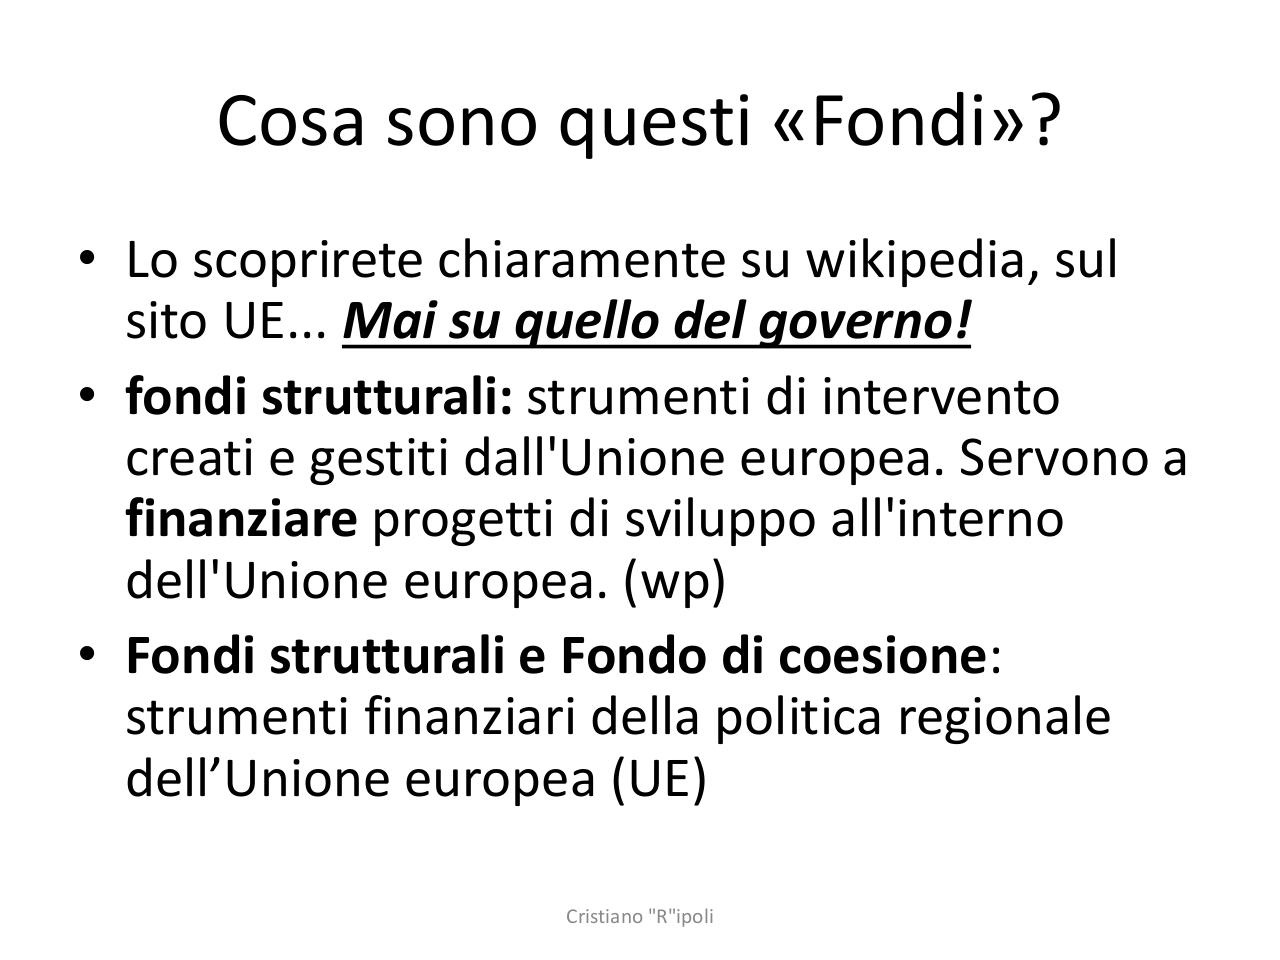 Finanziamenti Europei.pdf - page 4/38